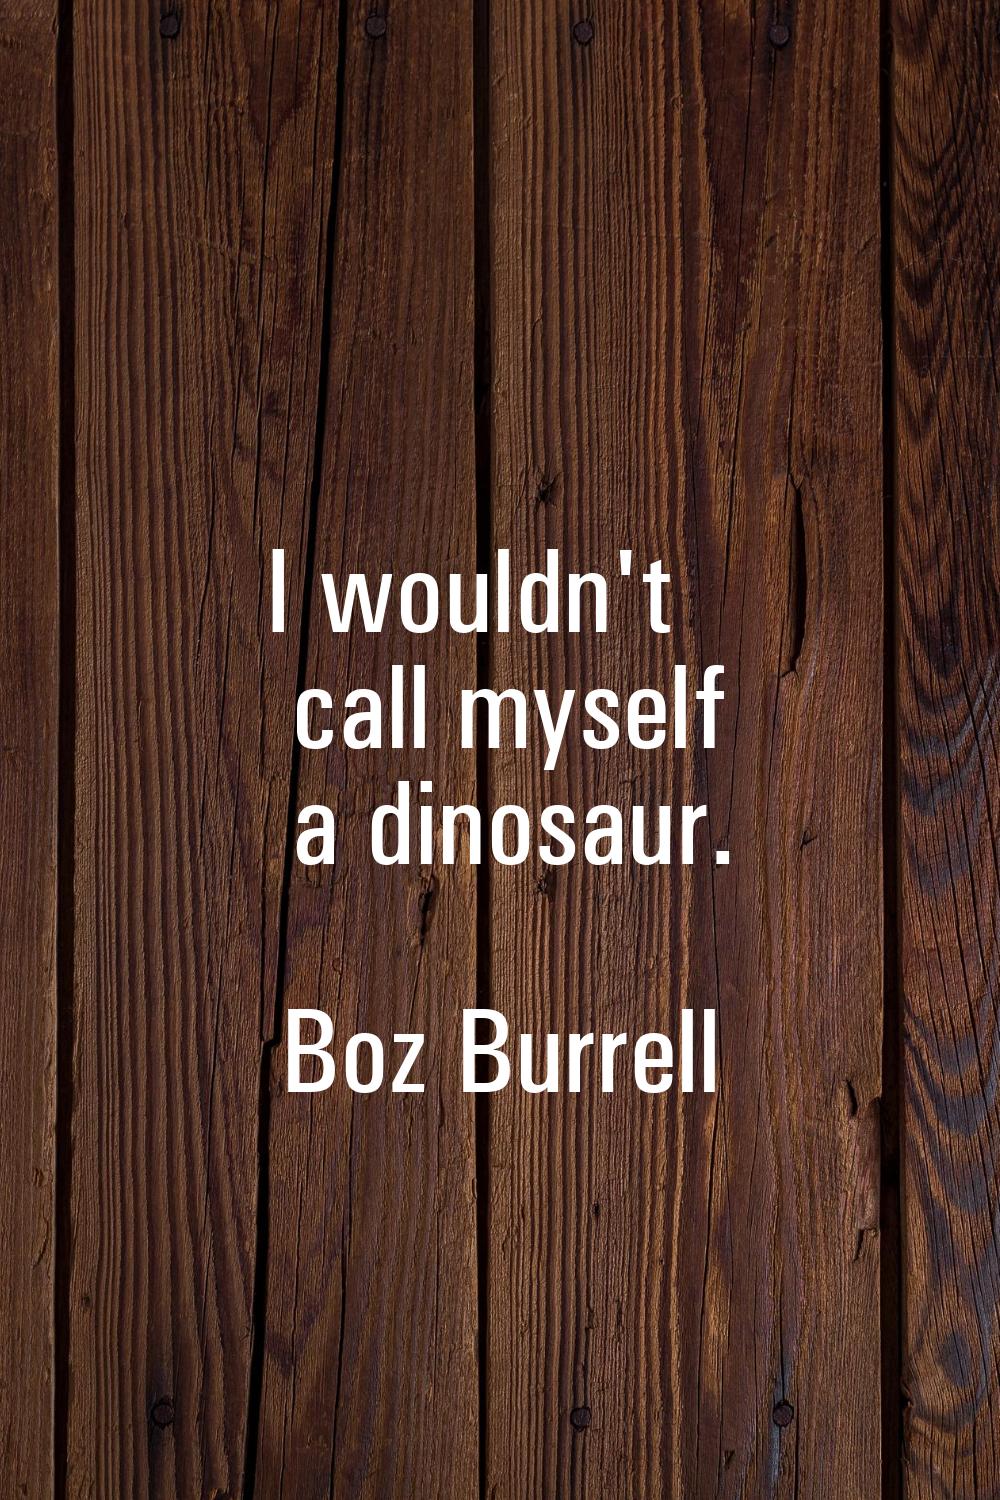 I wouldn't call myself a dinosaur.